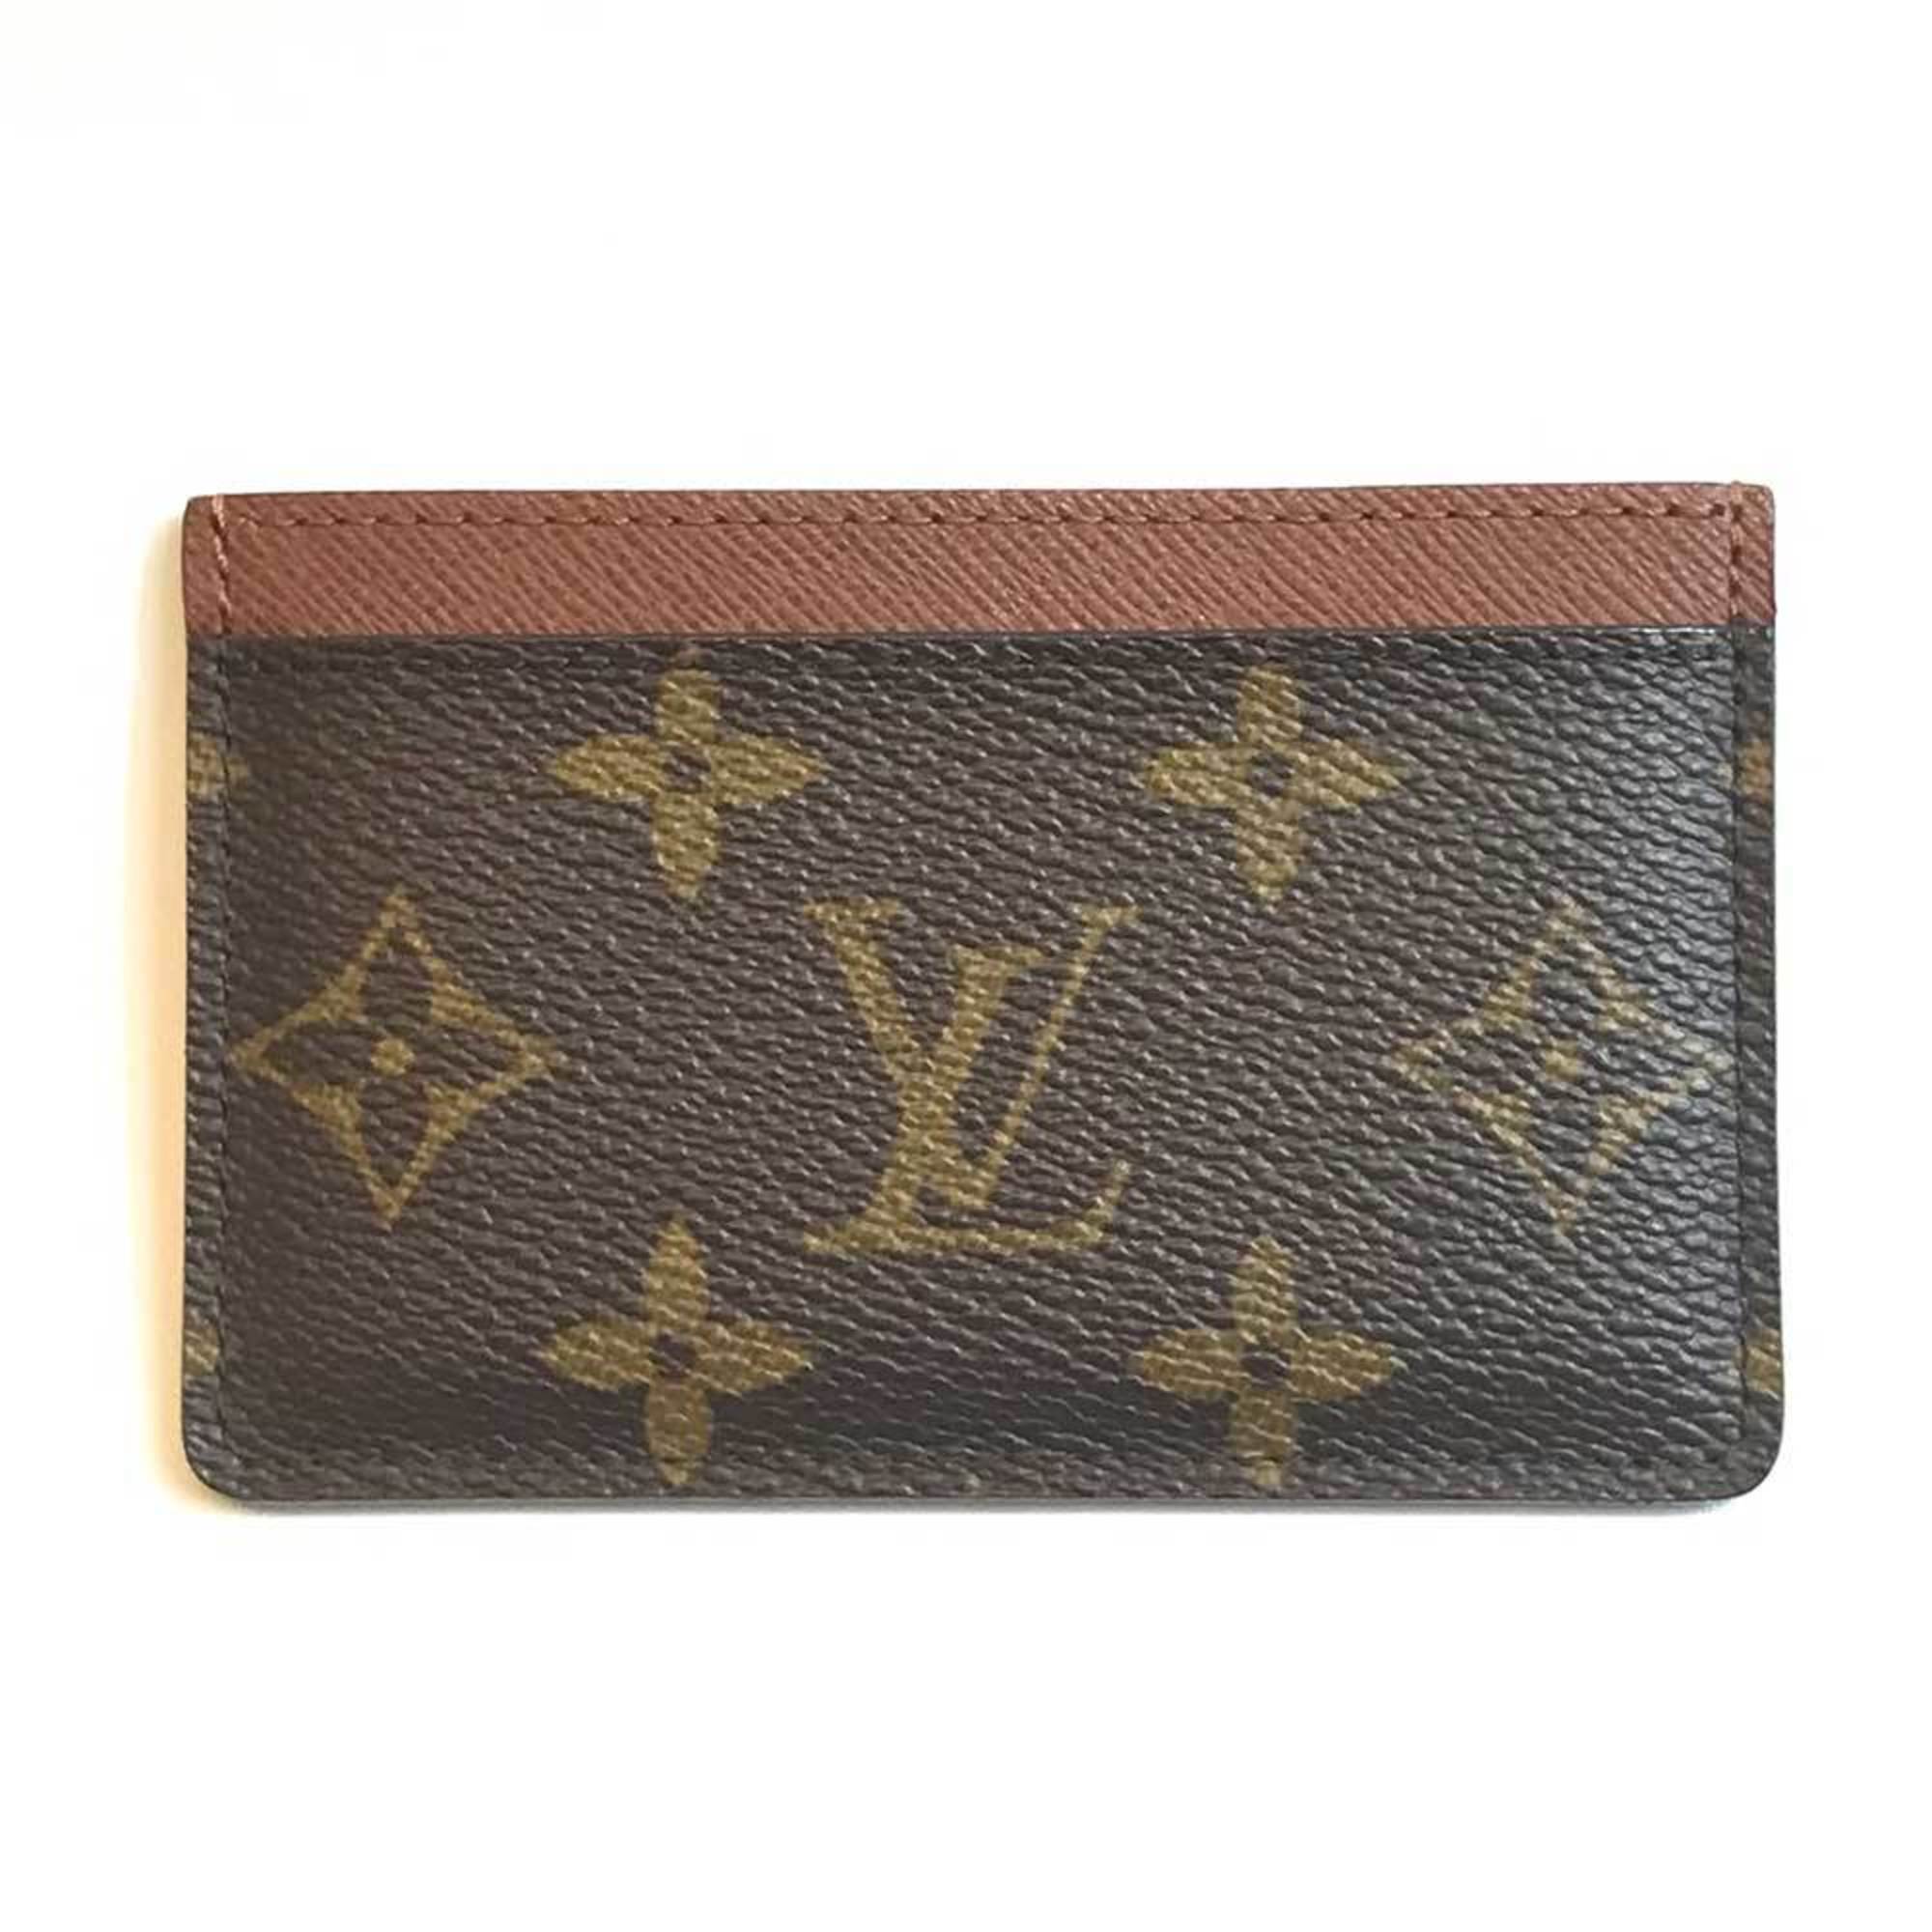 Louis Vuitton Business Card Holder/Card Case Porte Carte Sample Monogram M61733 LOUIS VUITTON